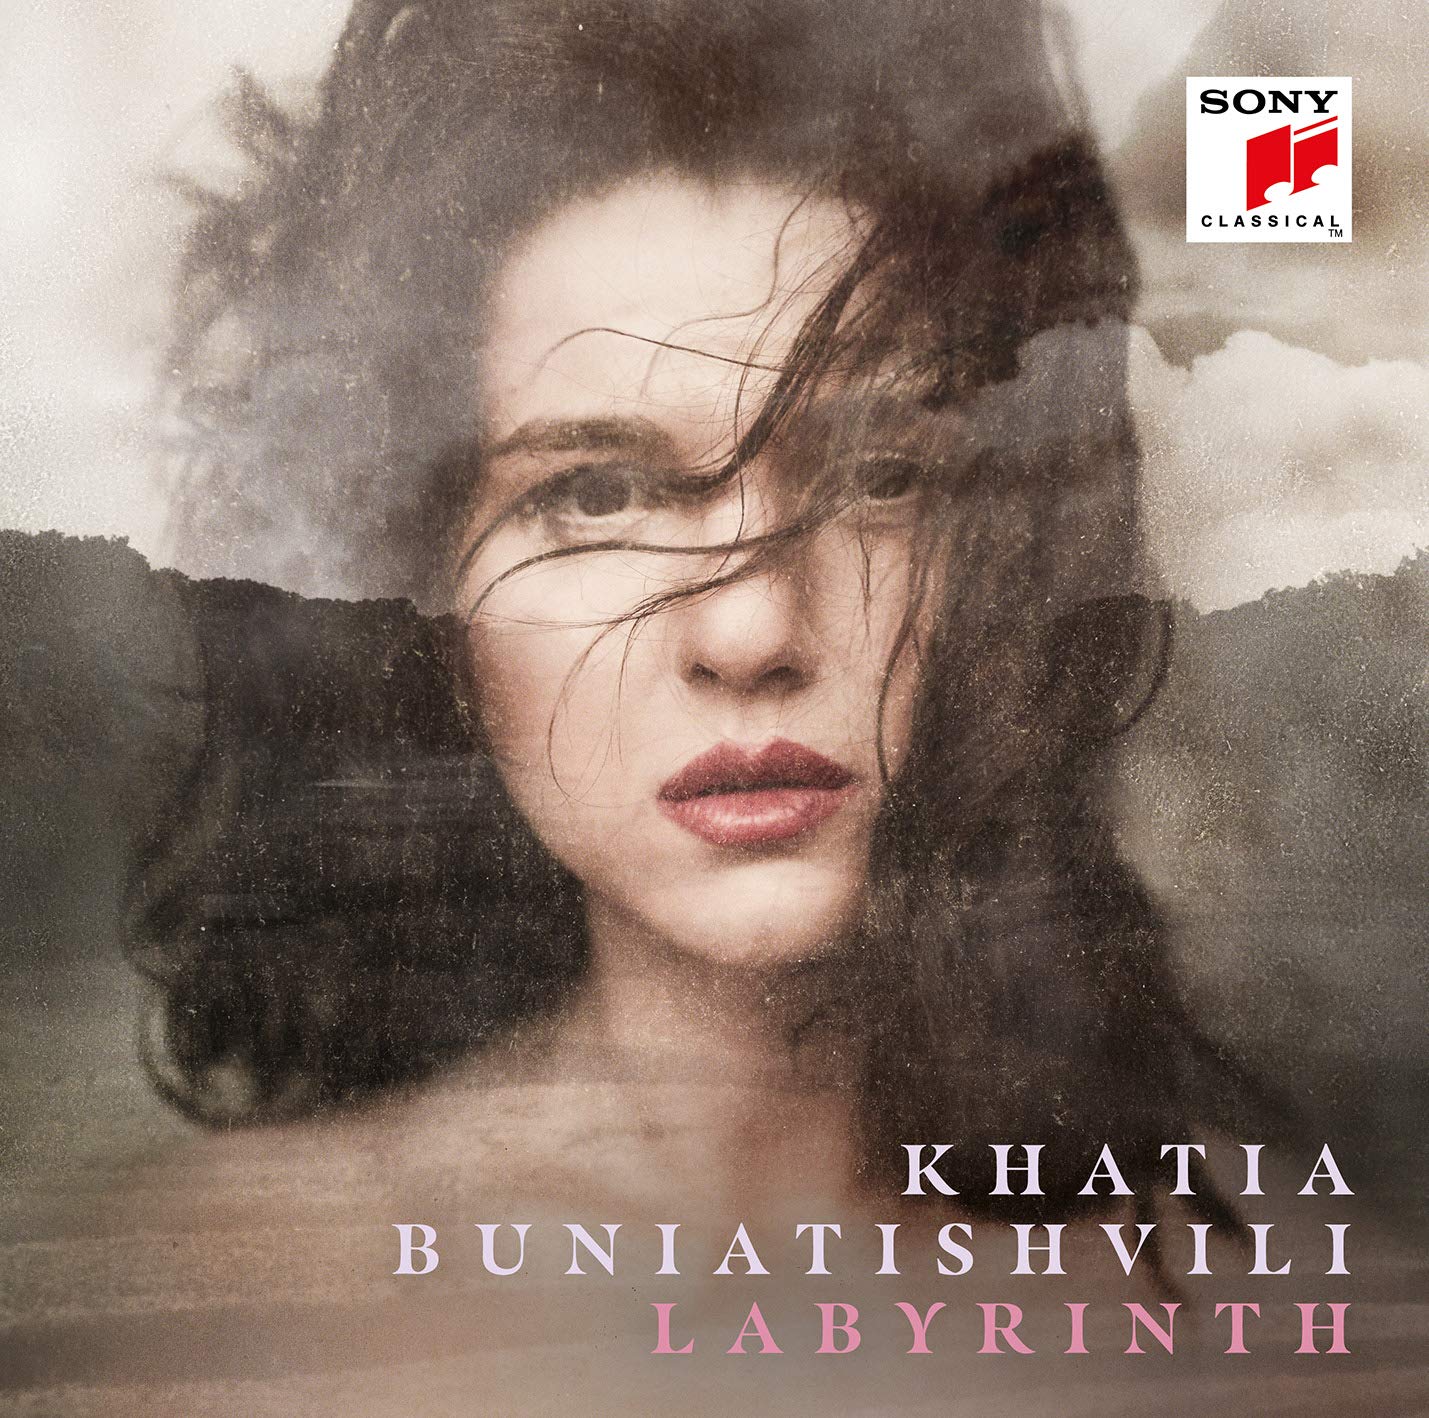 Khatia Buniatishvili - Laybrinth